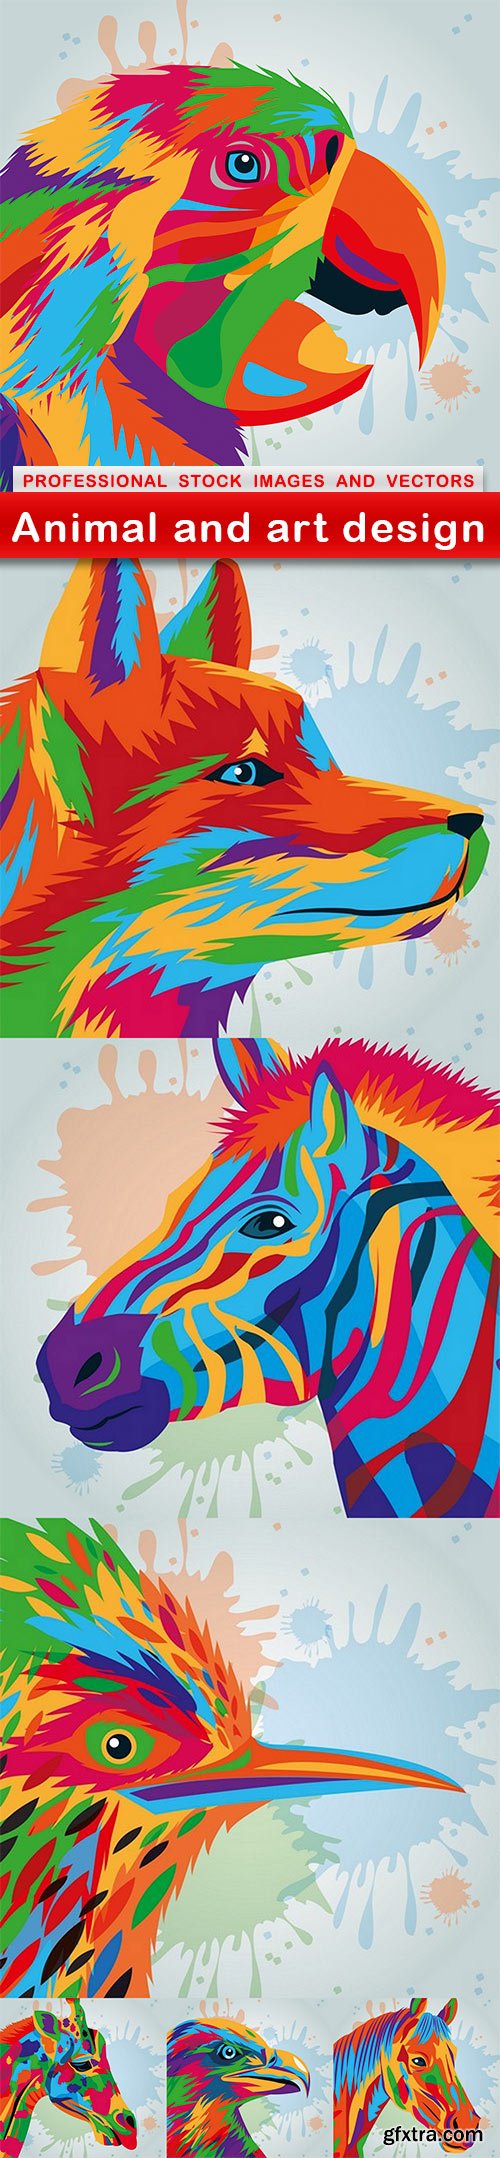 Animal and art design - 7 EPS